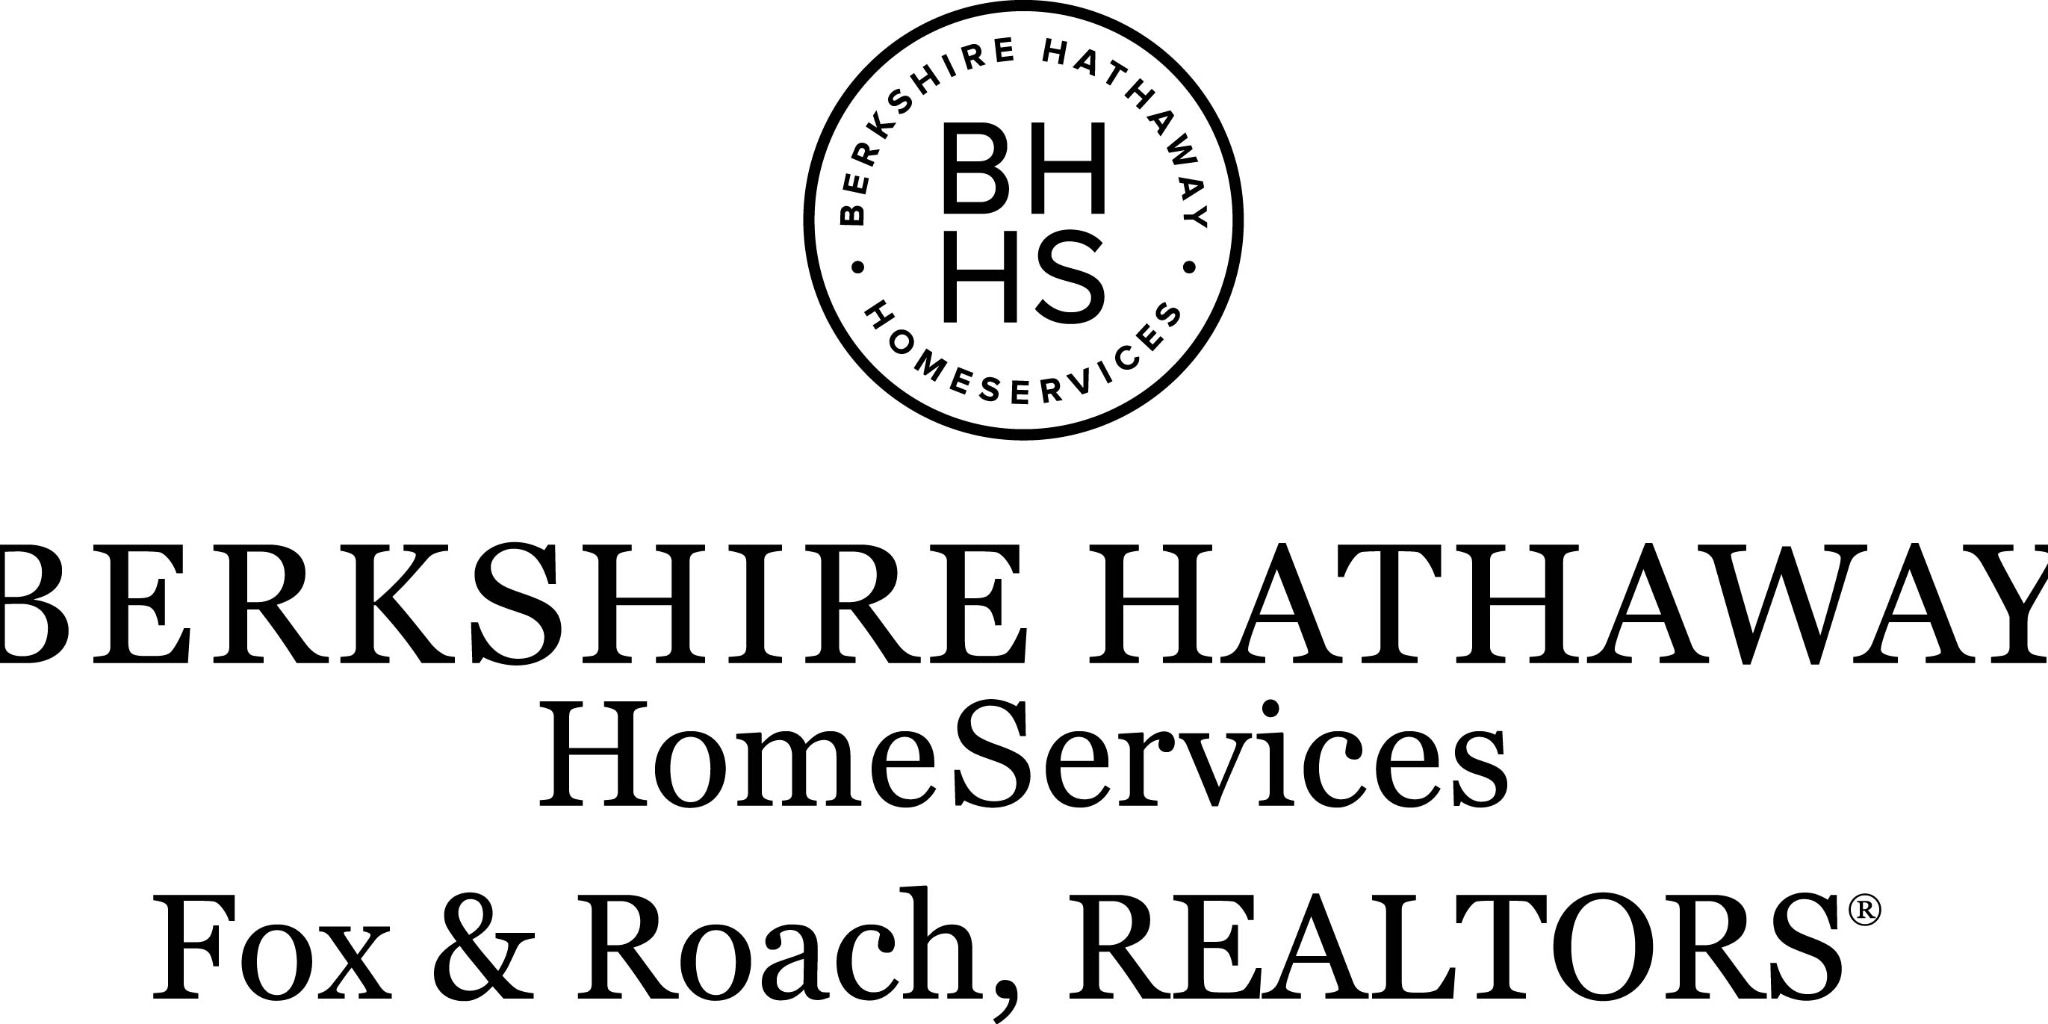 Berkshire Hathaway Home Services Fox & Roach, Realtors